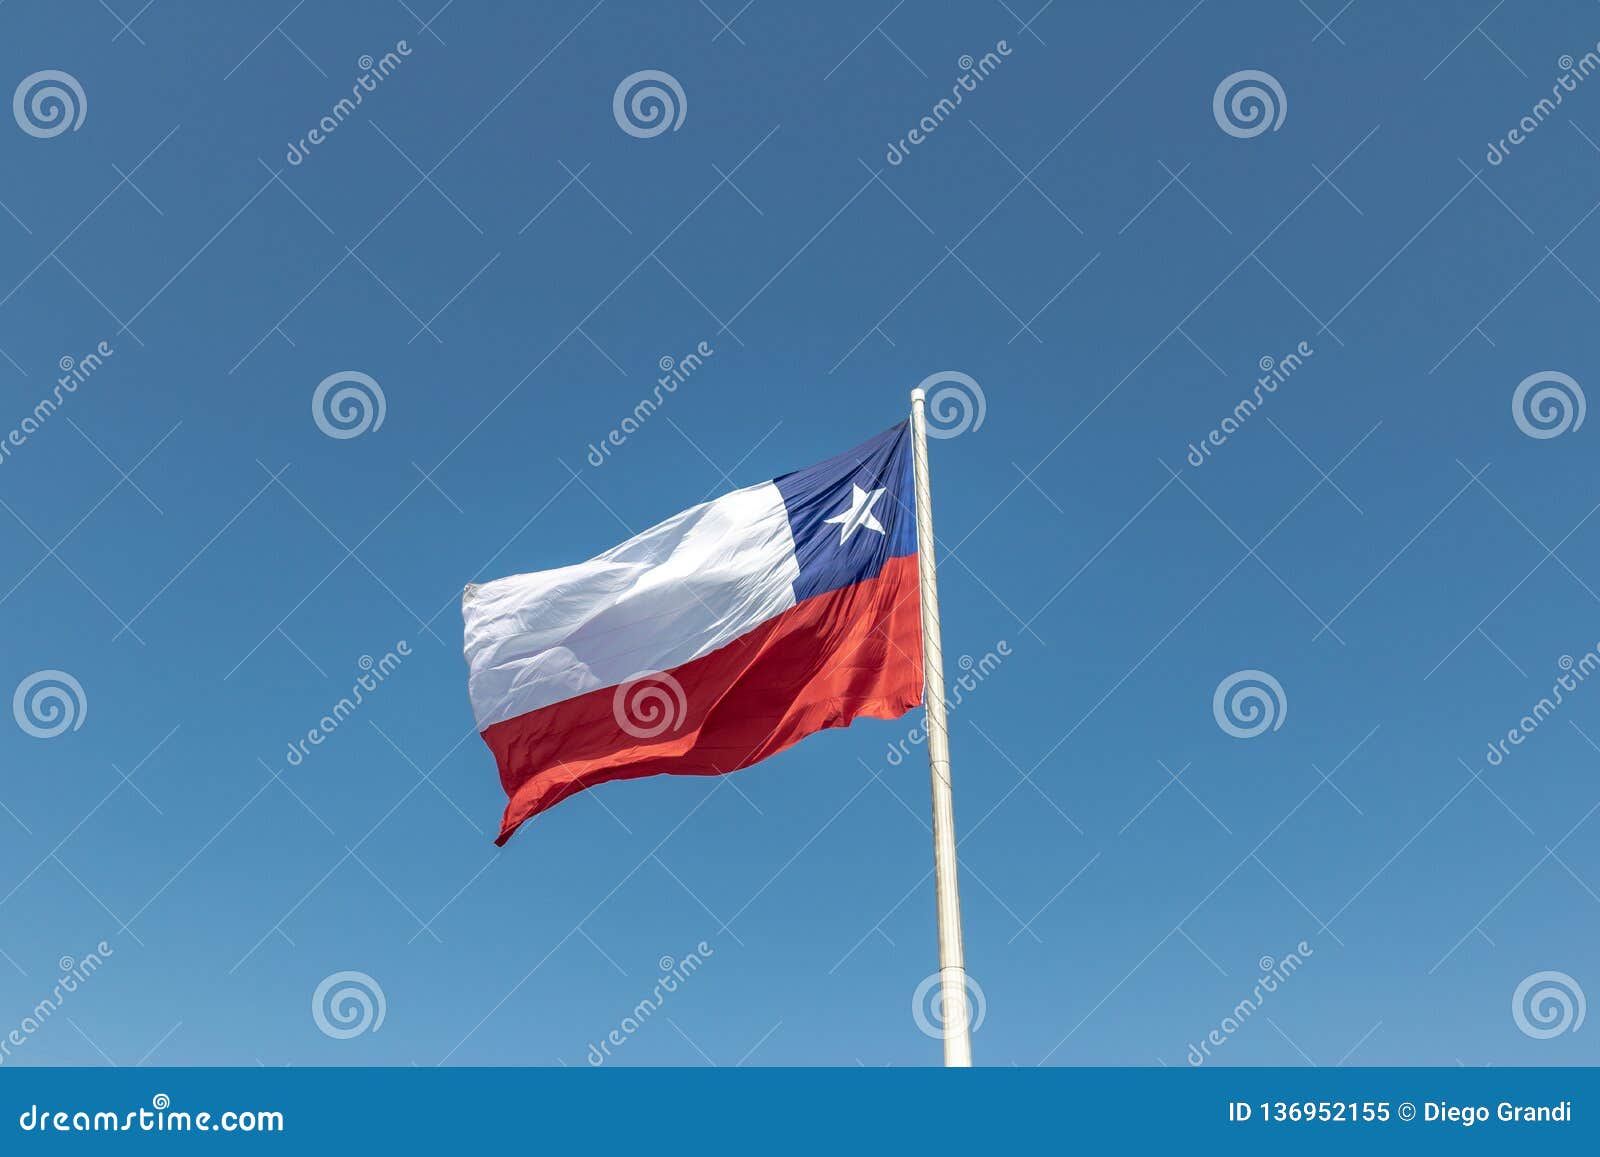 chilean flag - santiago, chile